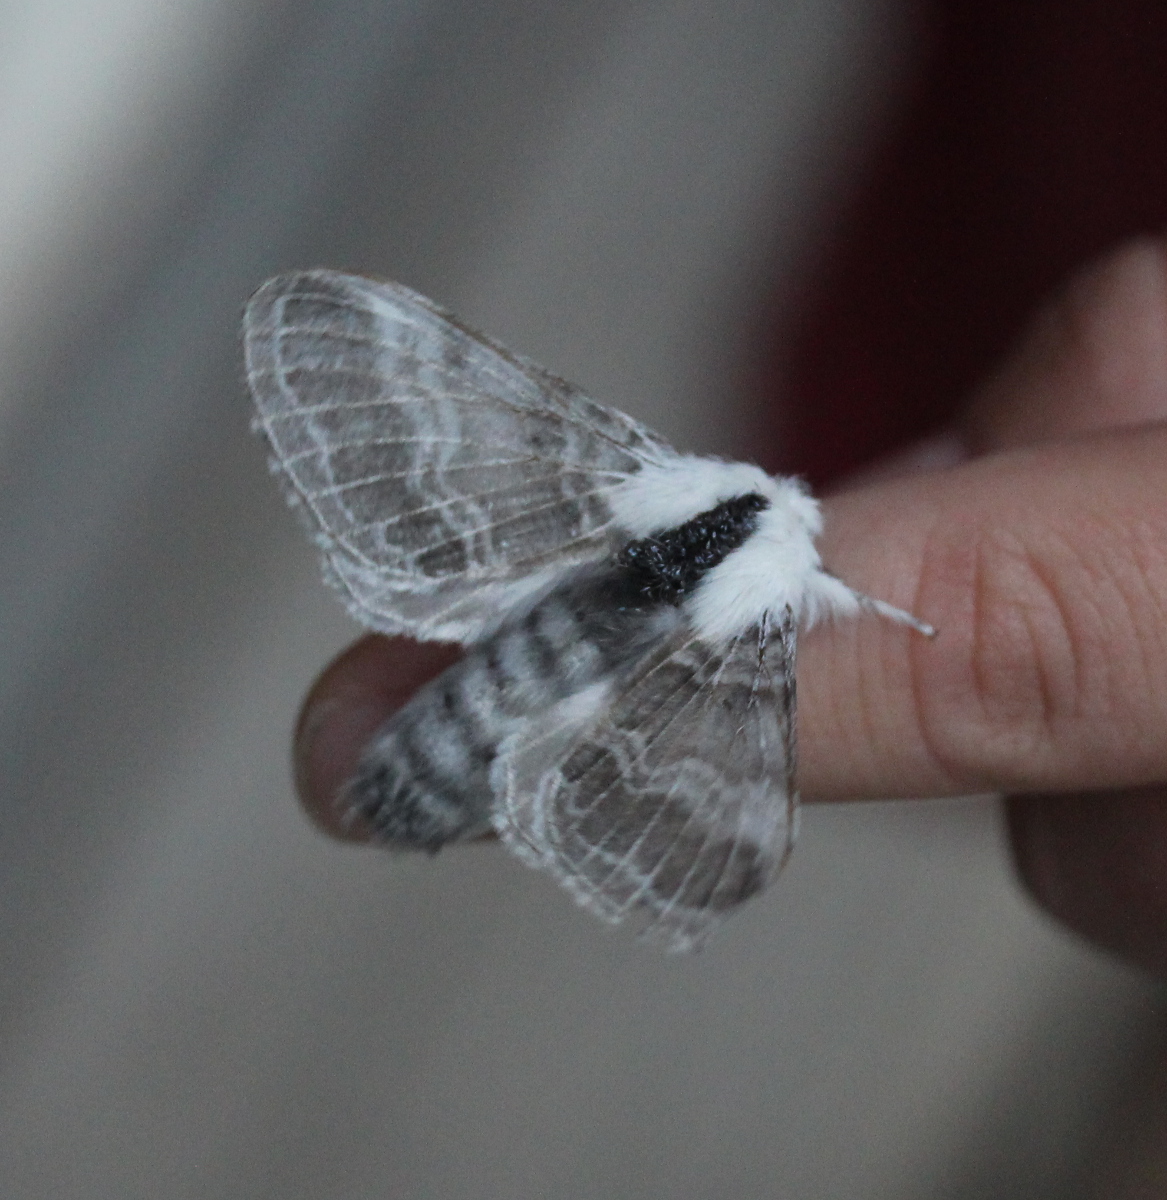 grey/white moth fluttering for takeoff on fingertip